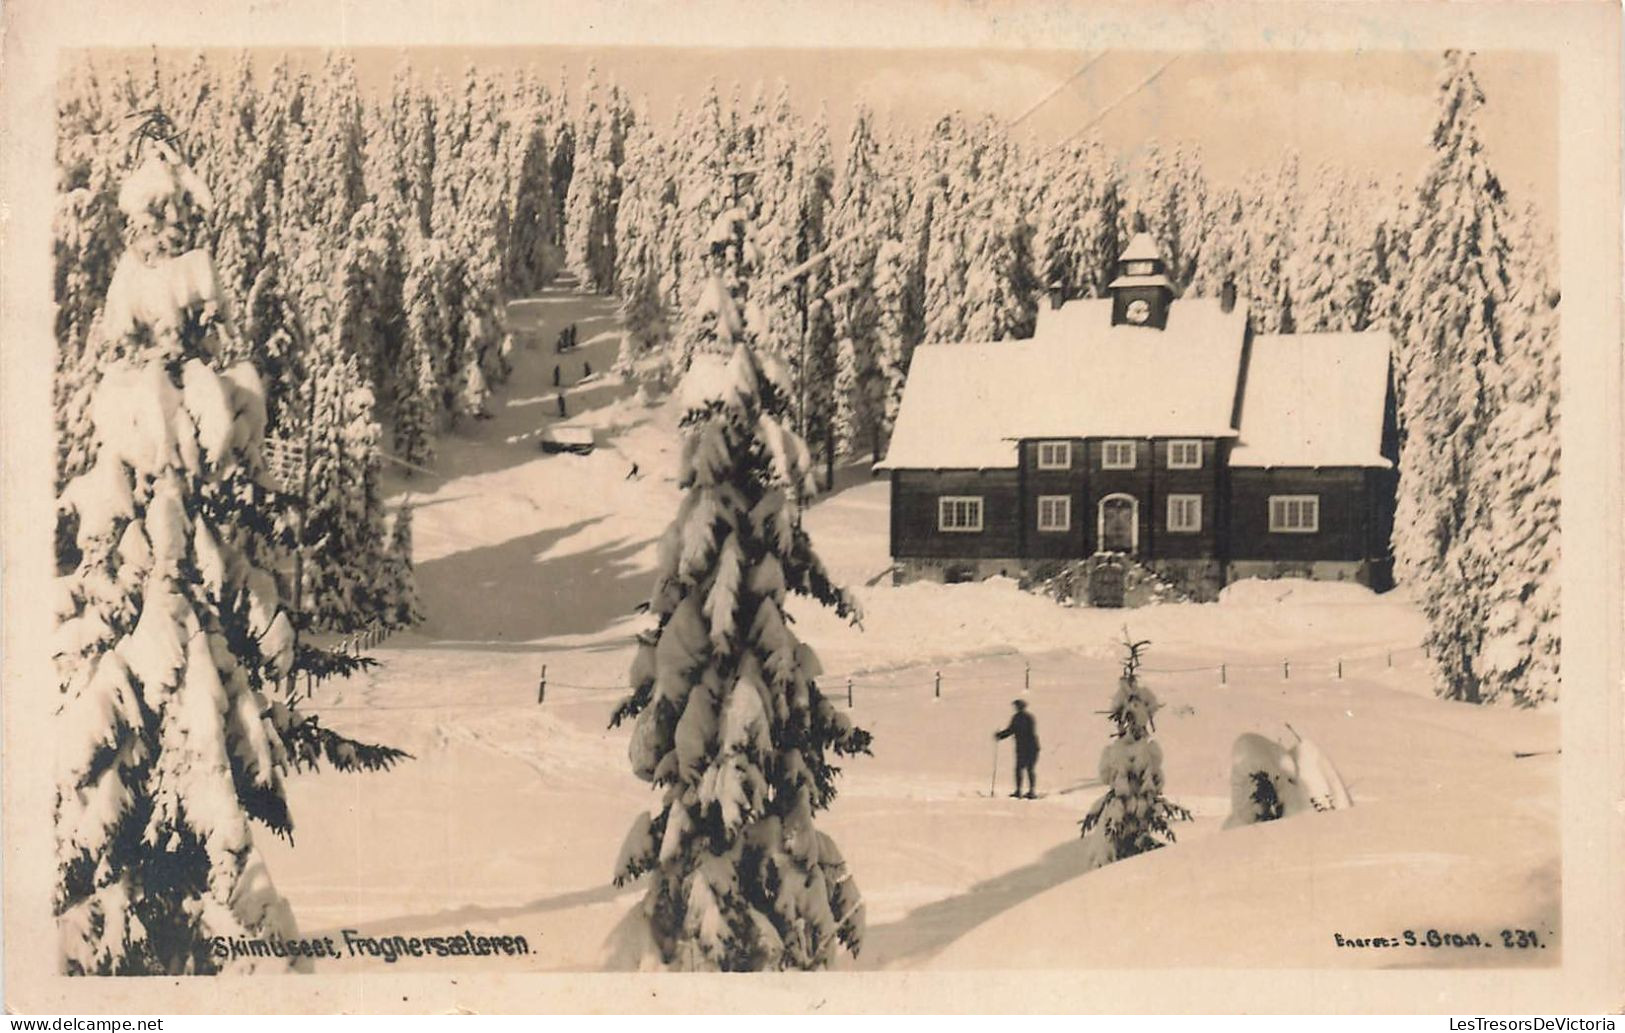 NORVEGE - Skimuseet Frognersaeteren - Station De Ski - Animé - Neige - Sapins - Carte Postale Ancienne - Norwegen